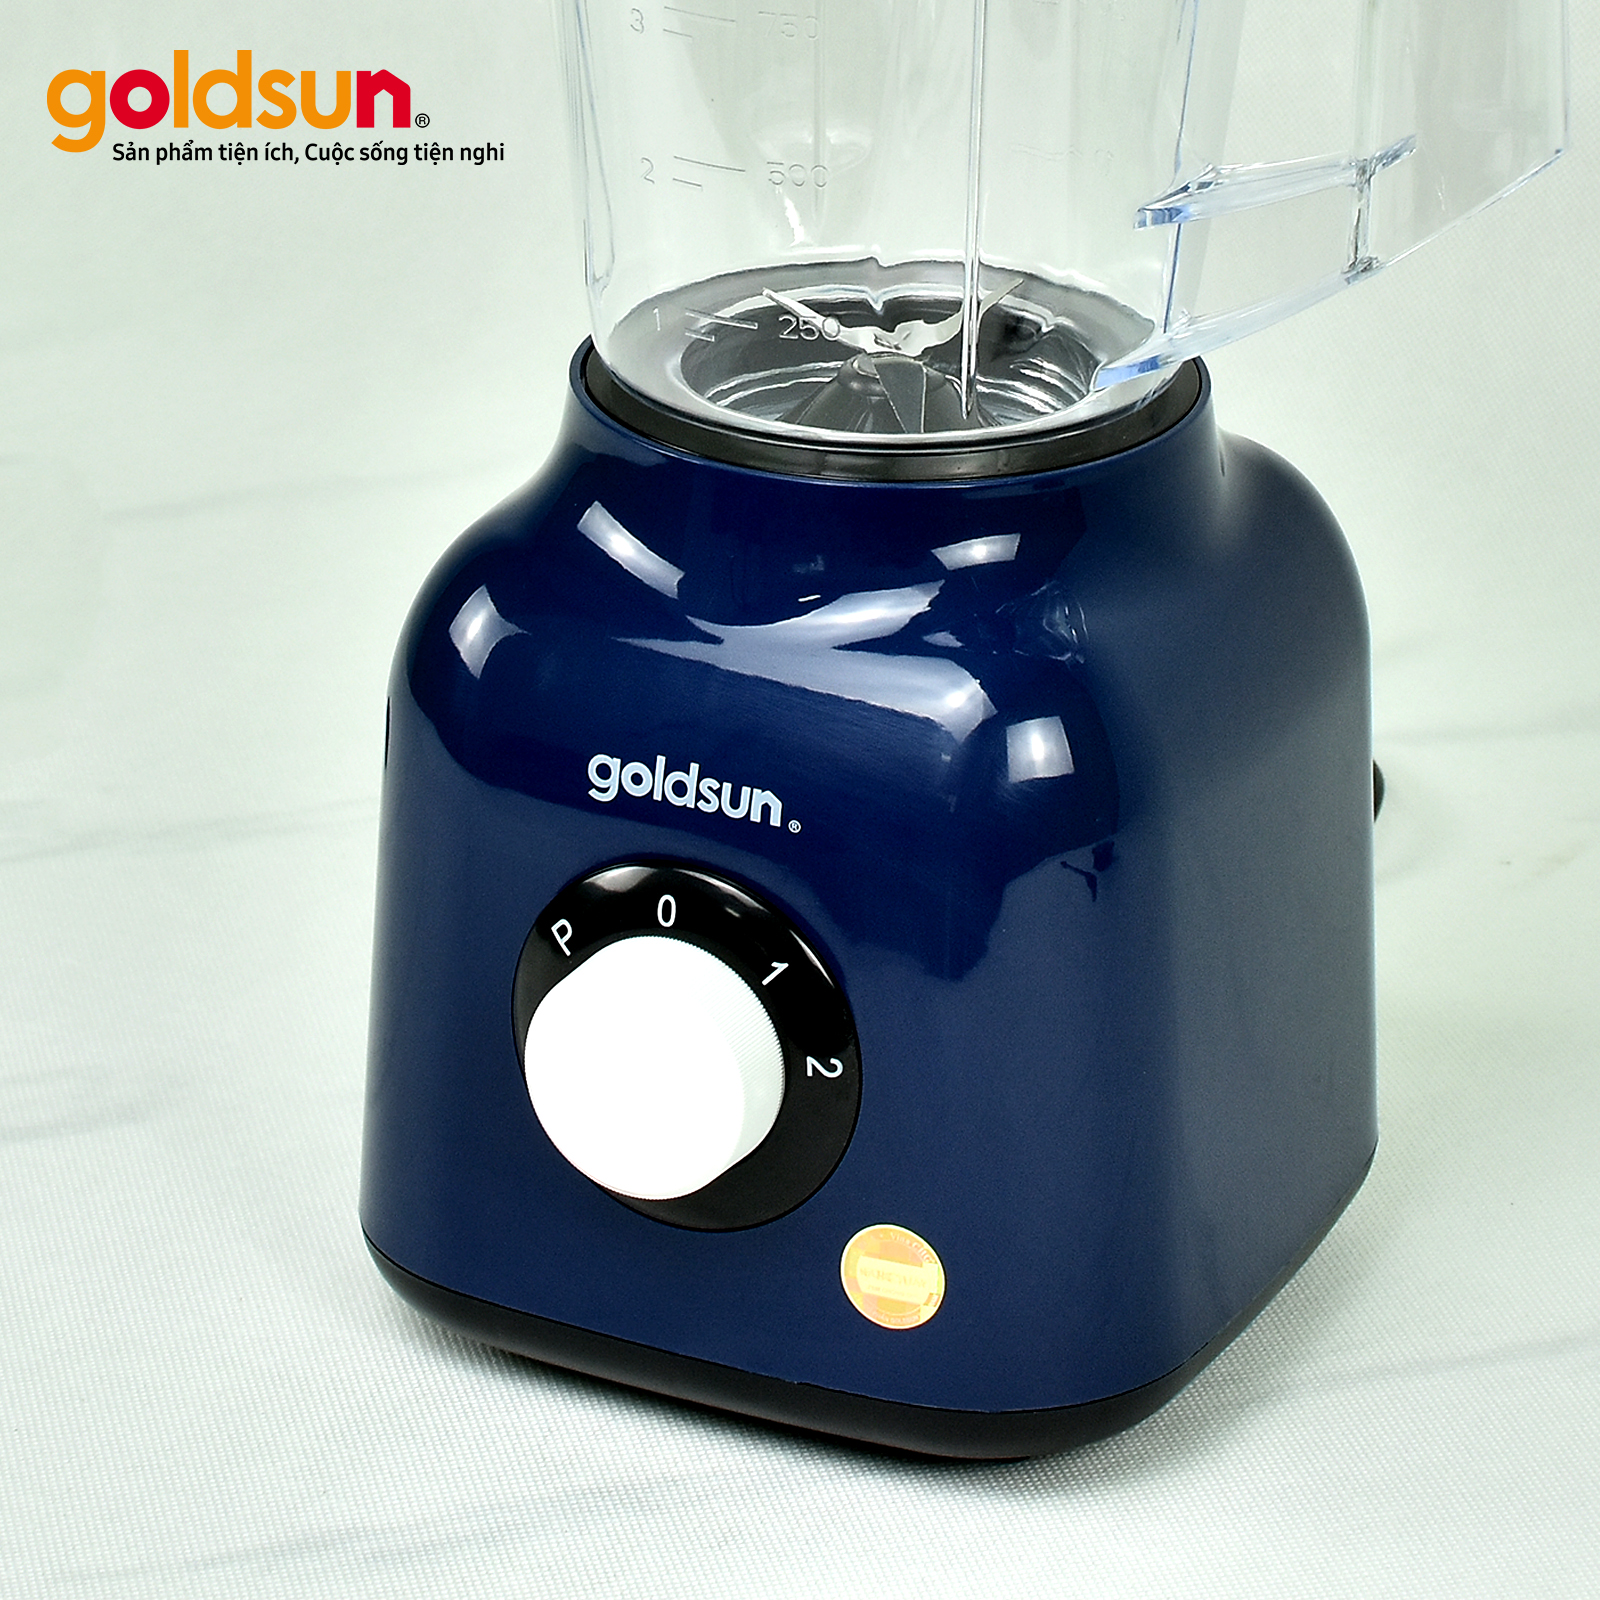 Máy xay sinh tố Goldsun 2 cối nhựa GBL4105